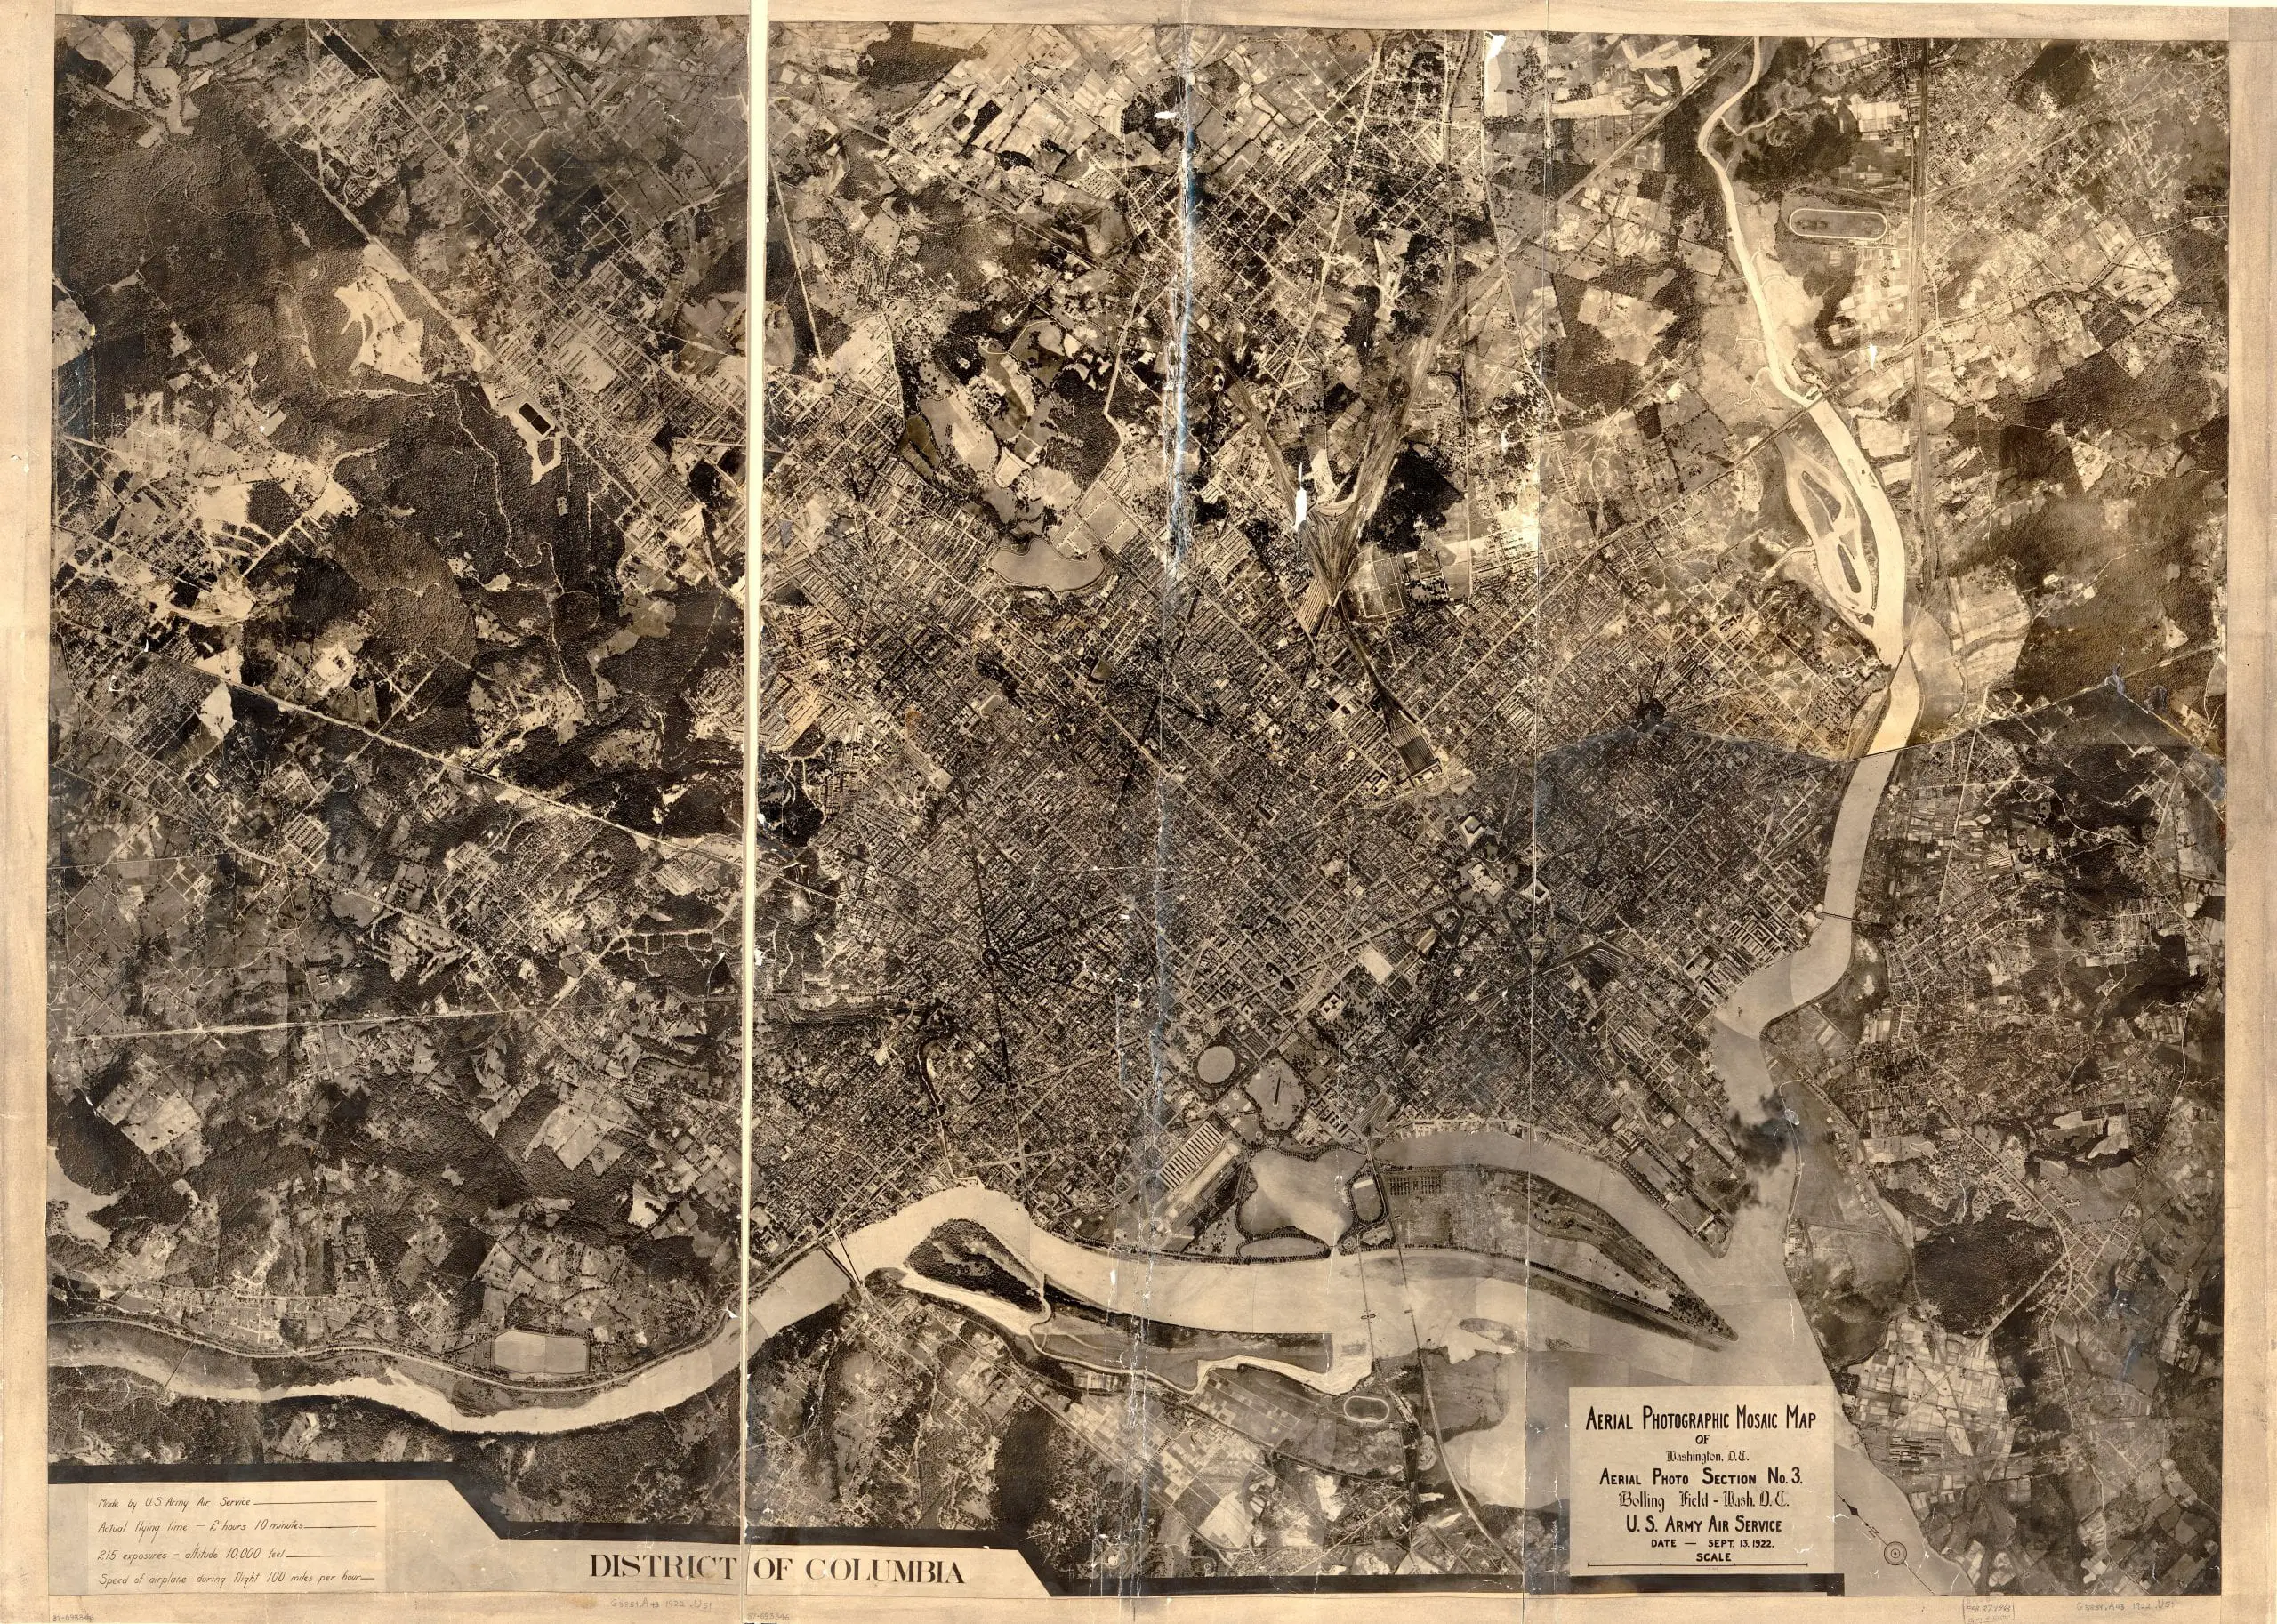 Aerial photographic mosaic map of Washington, D.C. (1922)